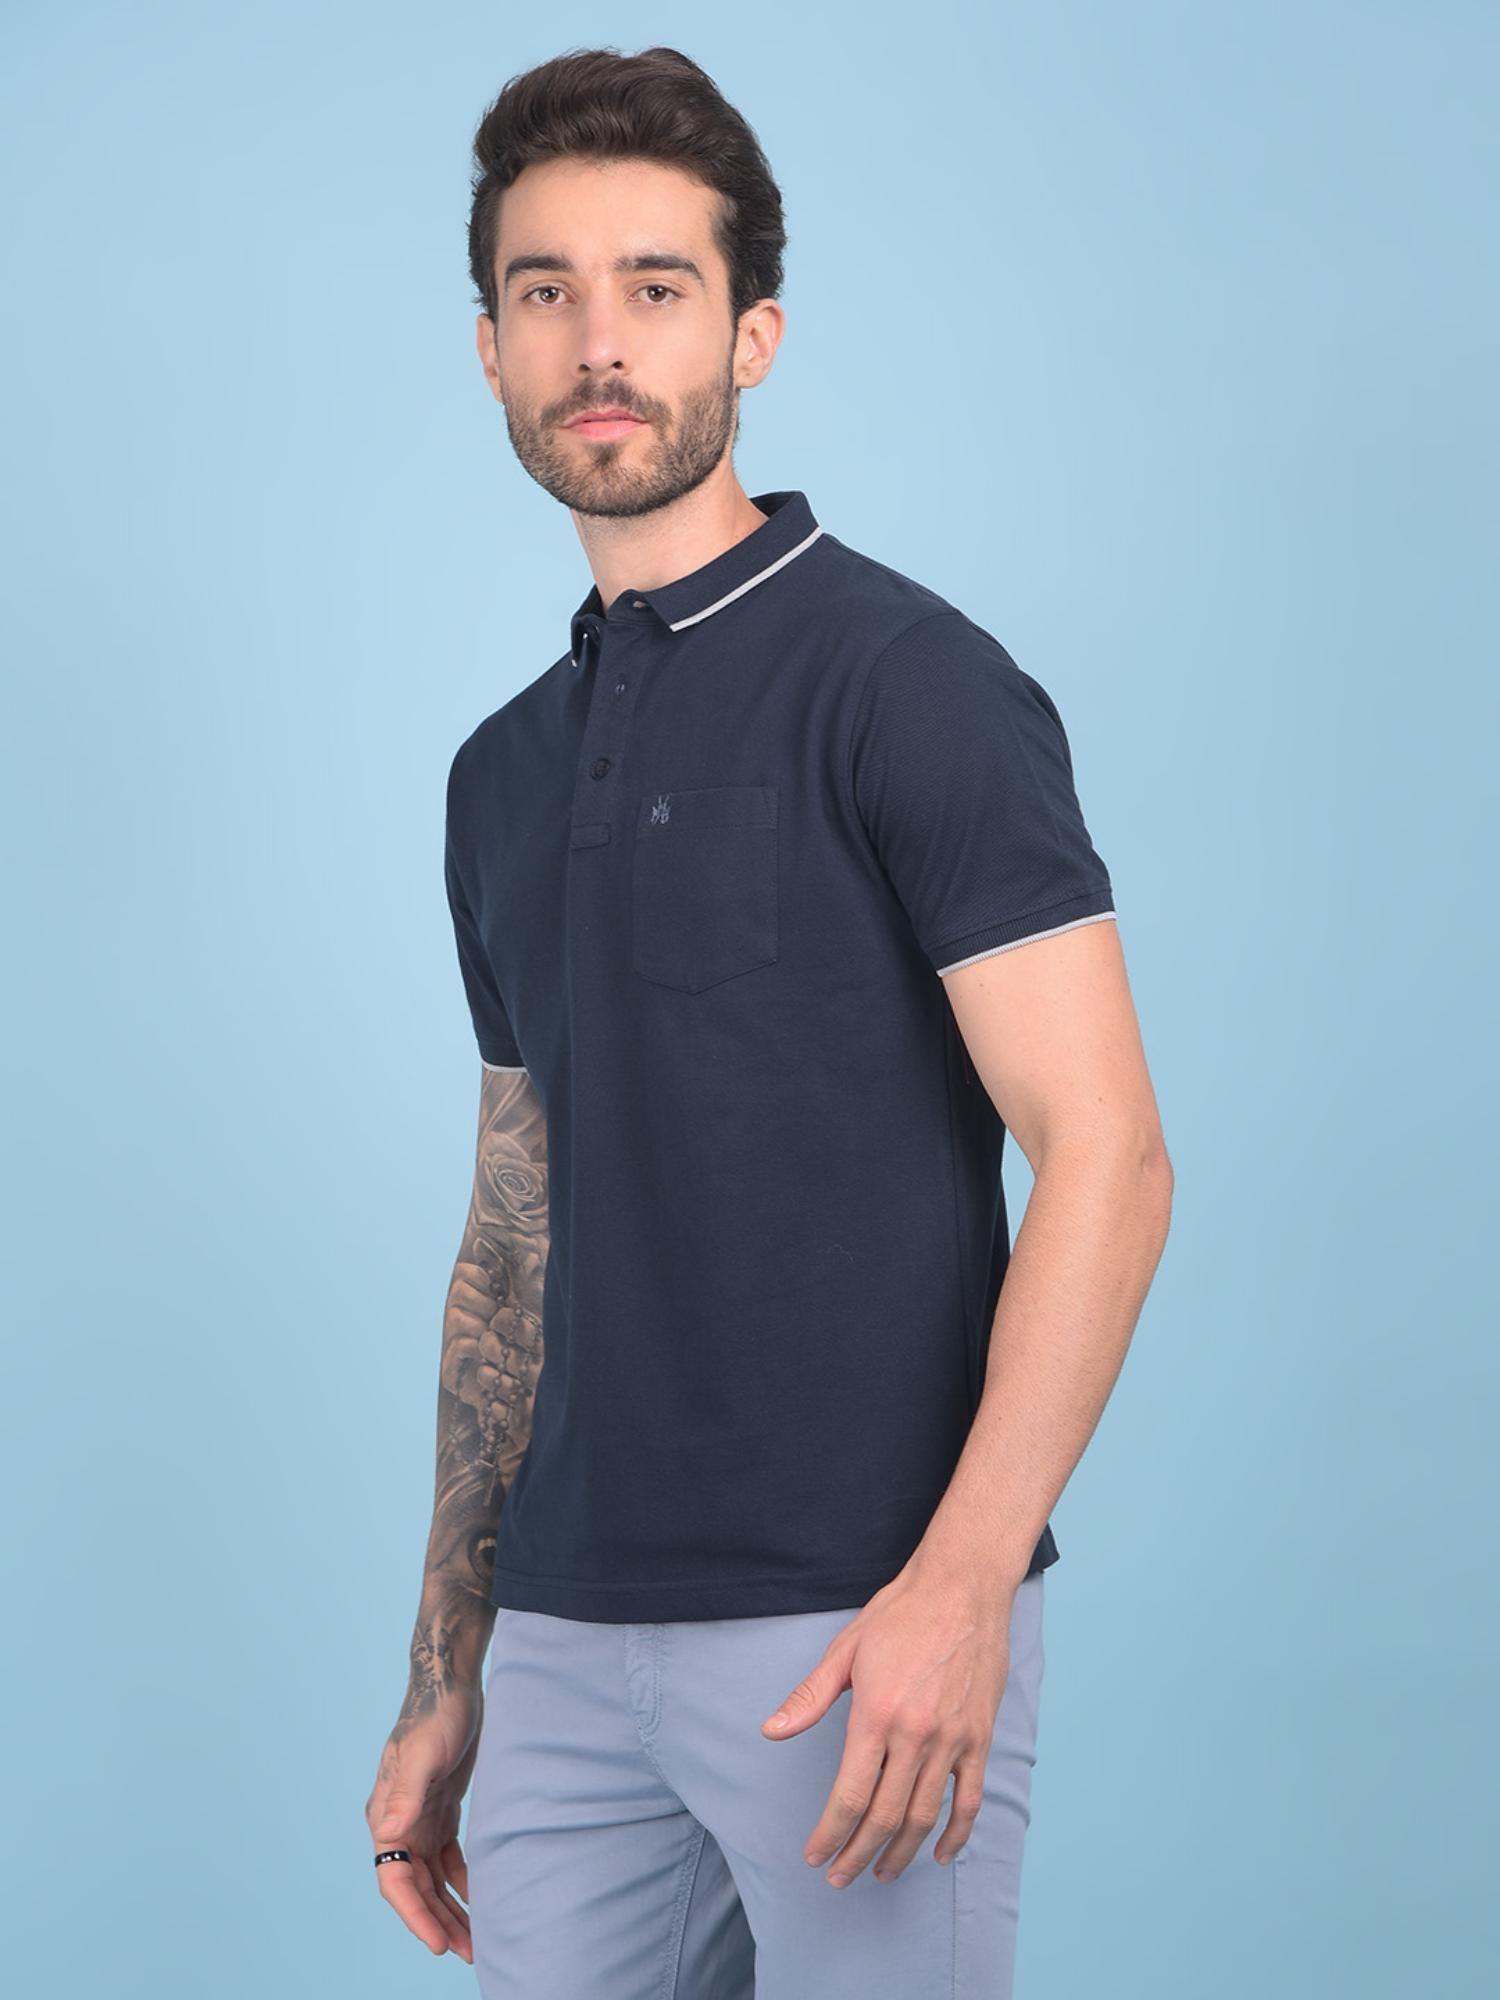 mens-navy-blue-polo-t-shirt